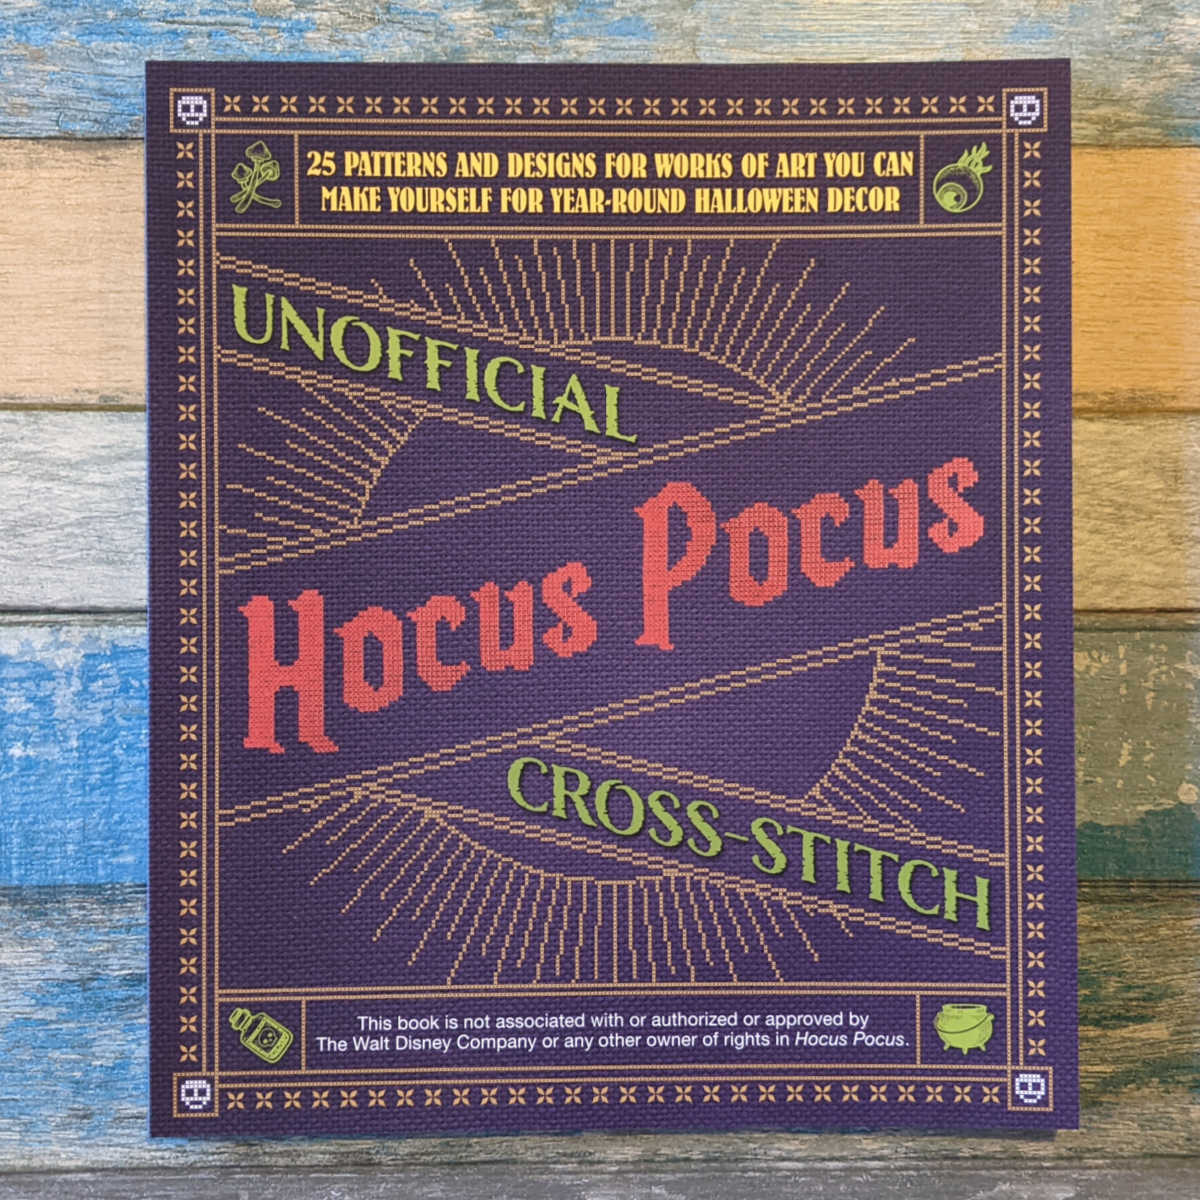 hocus pocus cross stitch patterns